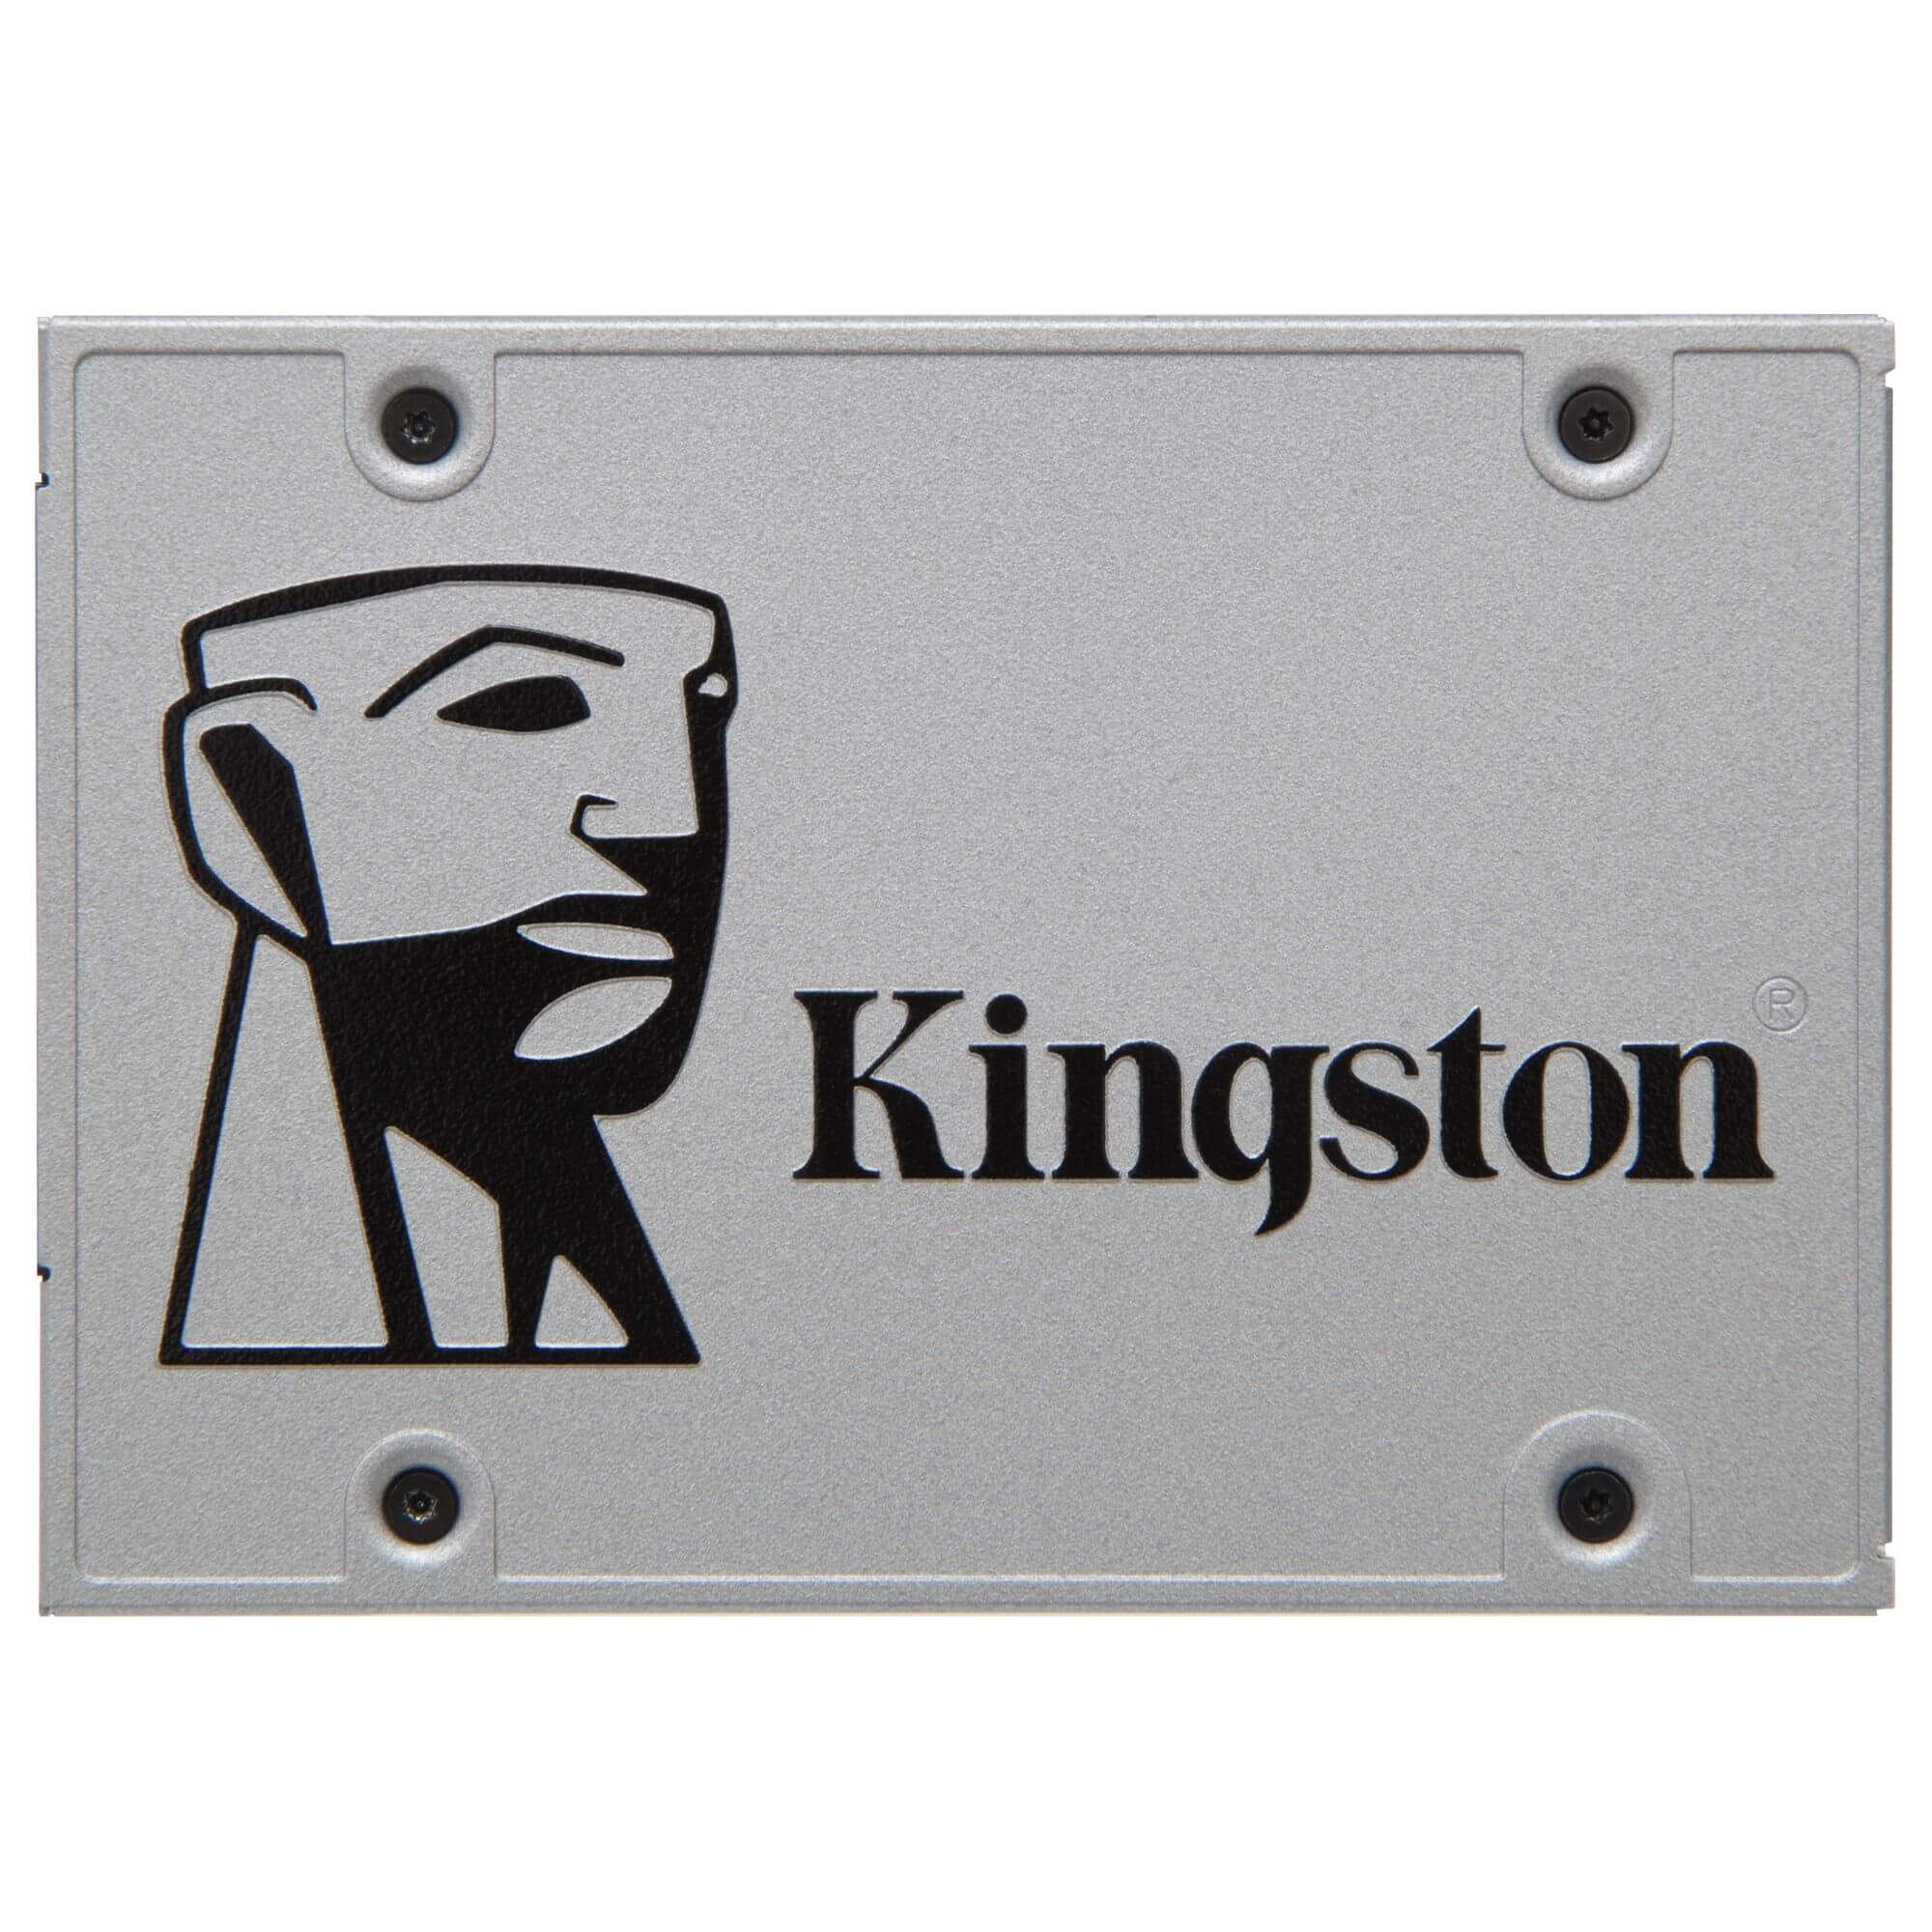  SSD Kingston SSDNow UV400, 120GB, SATA3 